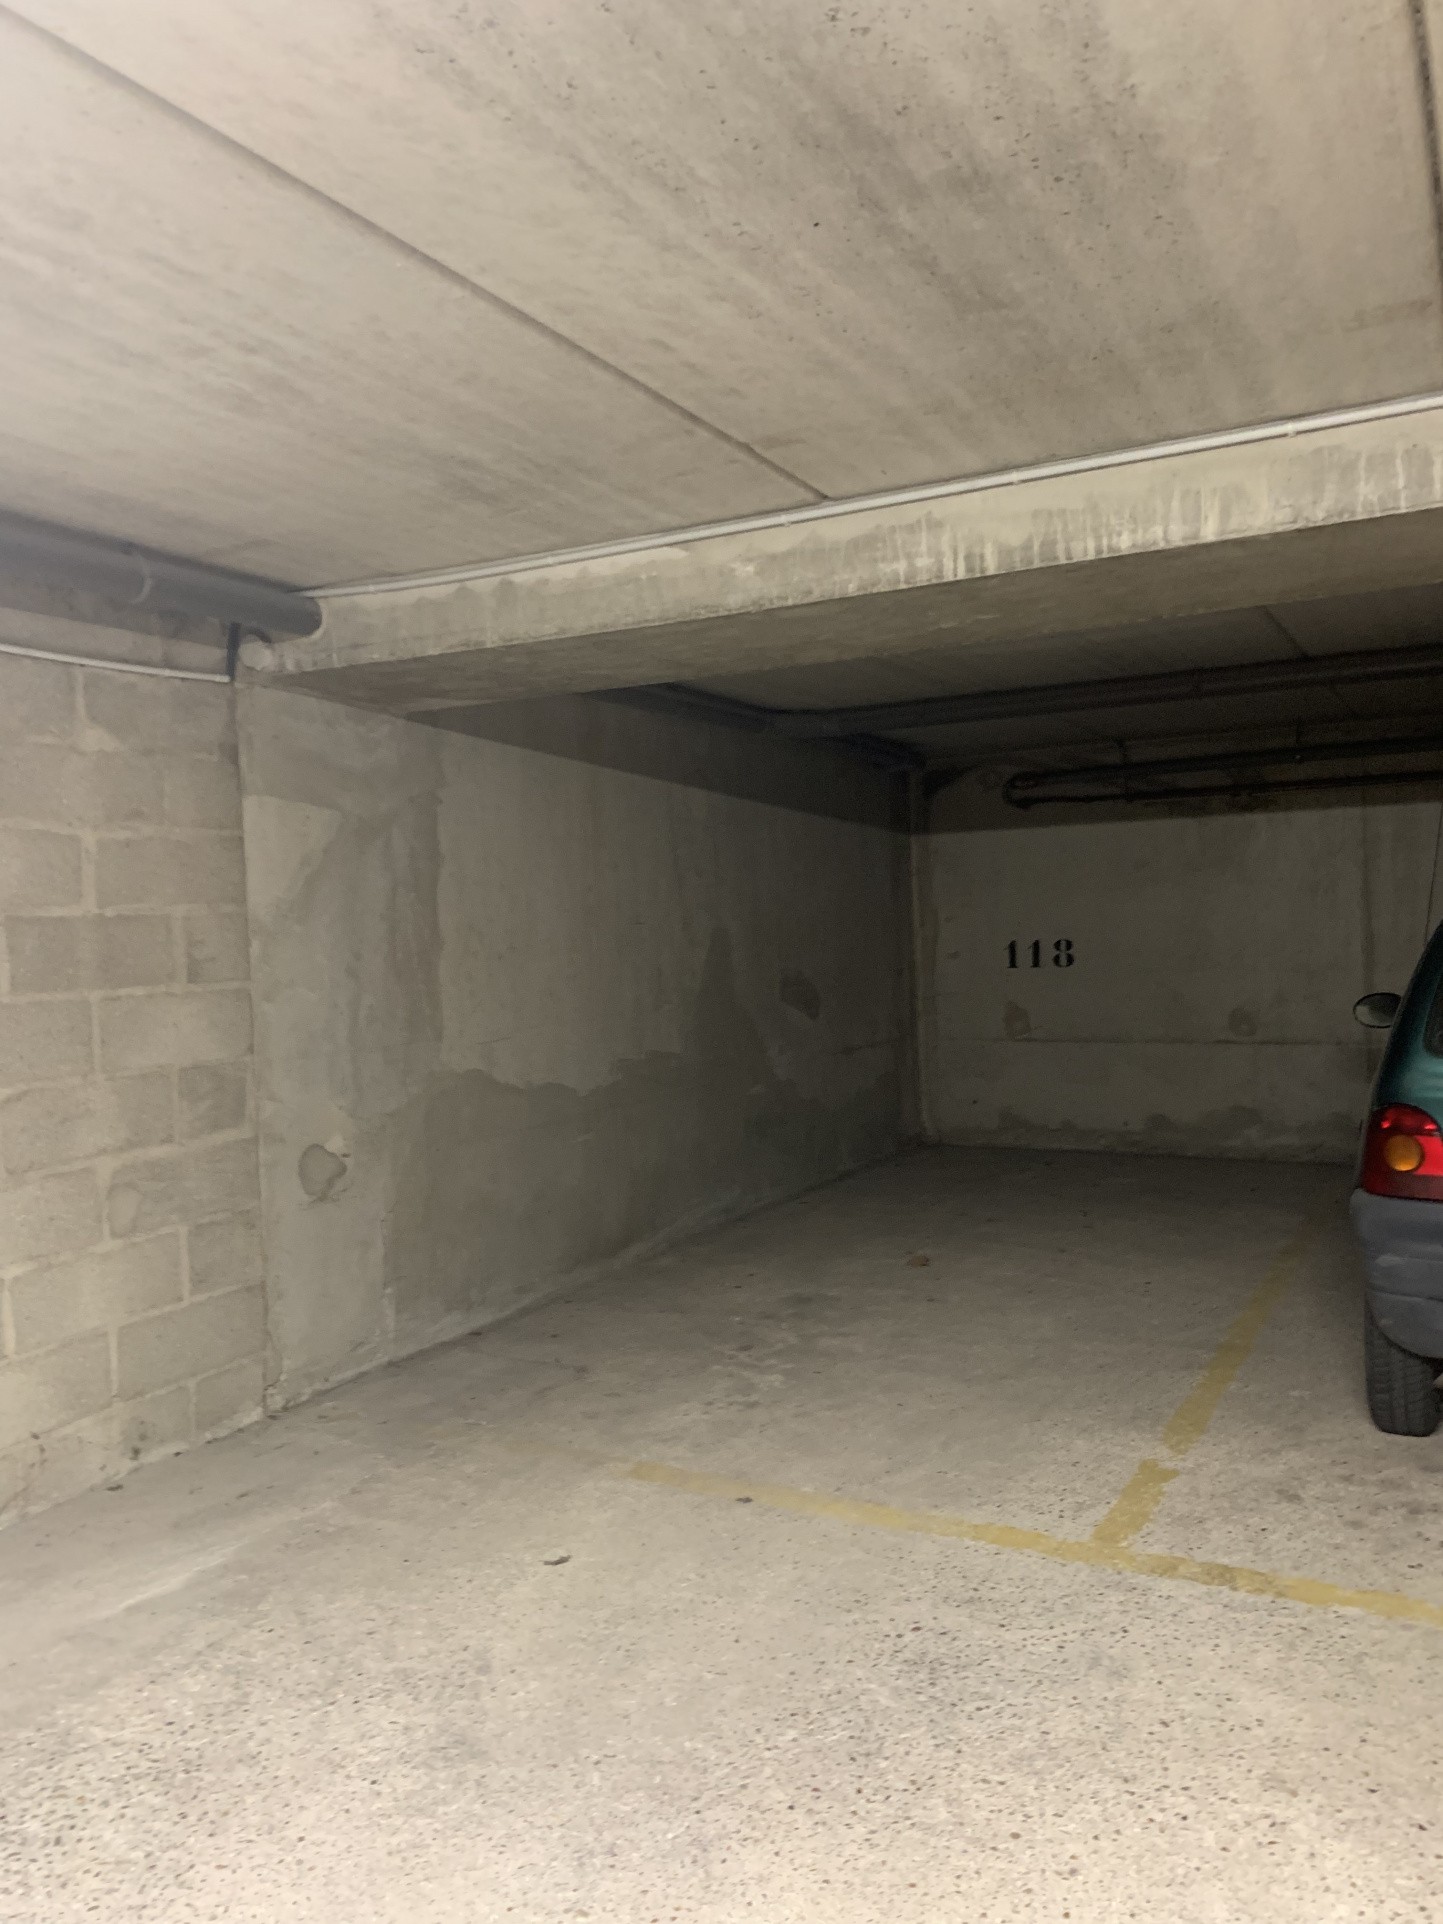 Location Garage / Parking à Étampes 0 pièce